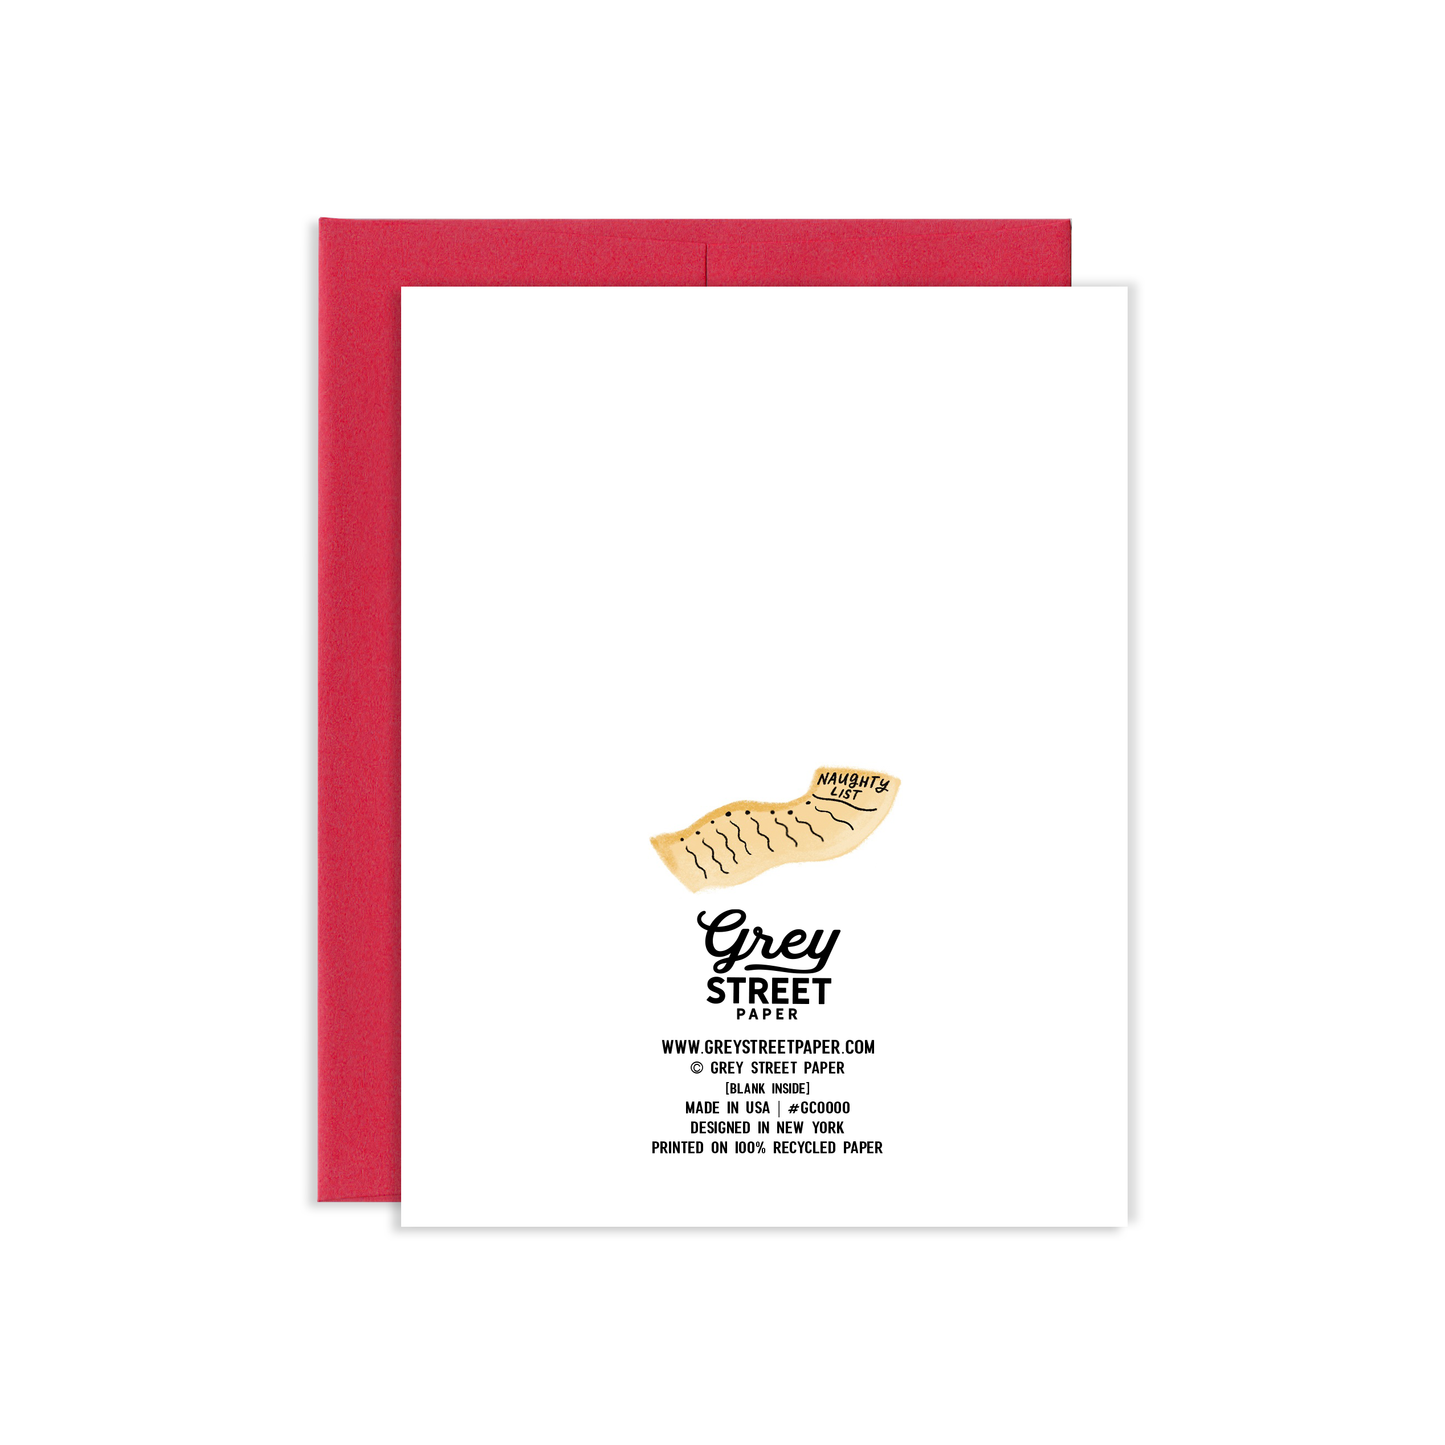 Naughty Hippo Holiday Greeting Card | Old Logo